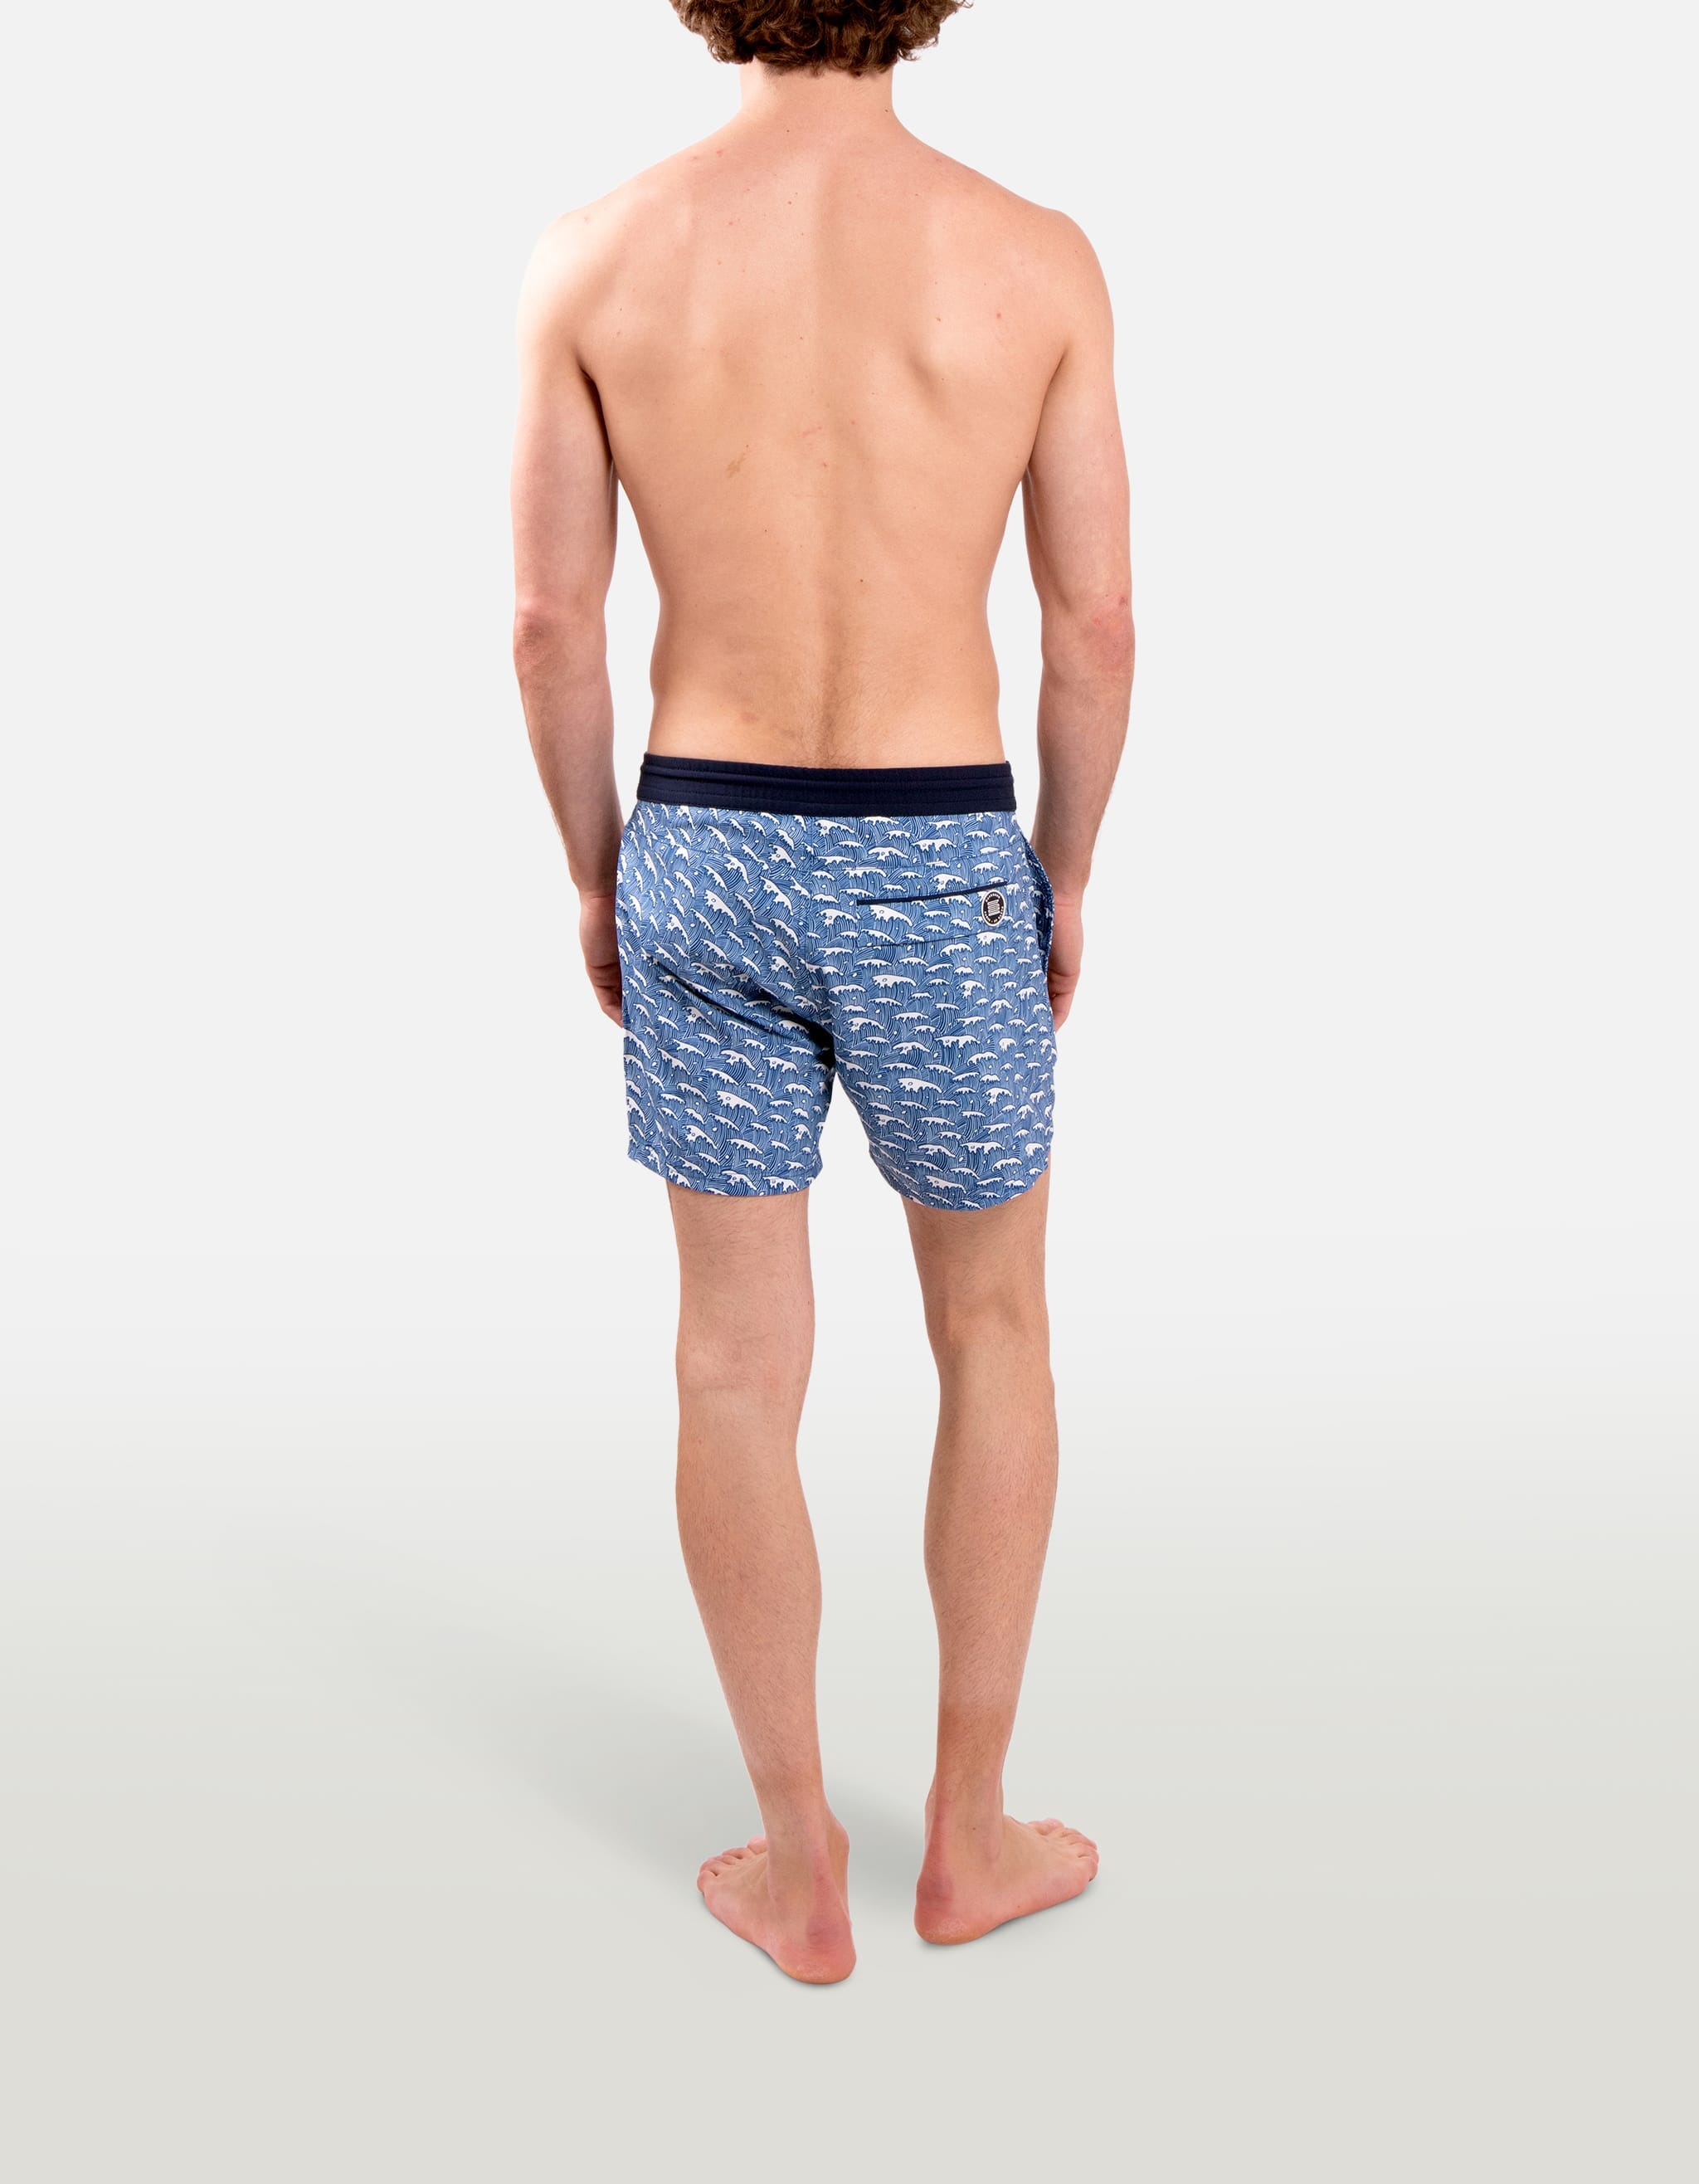 Ben - P21. Blue Waves Swim Shorts - Ben MACKEENE 